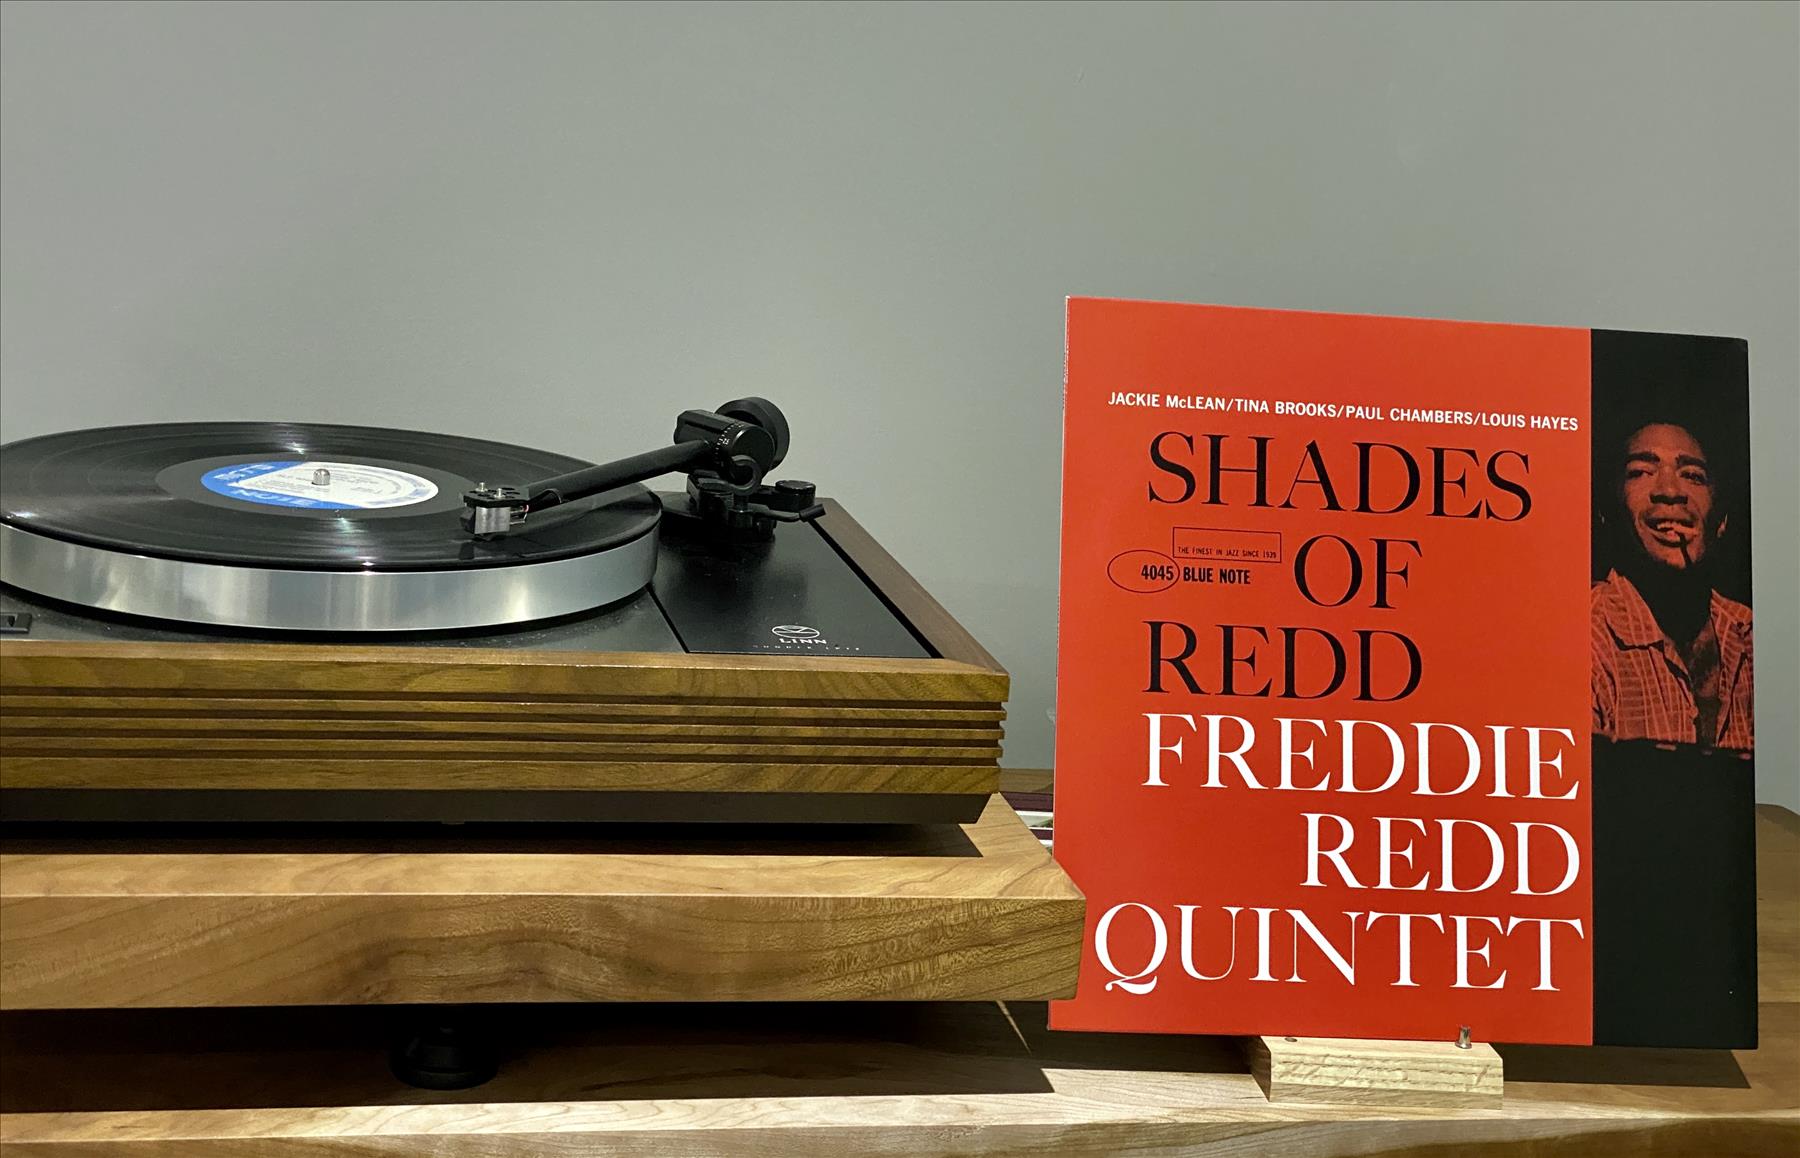 Freddie Redd Quintet’s Shades of Redd: my kind of desert island music